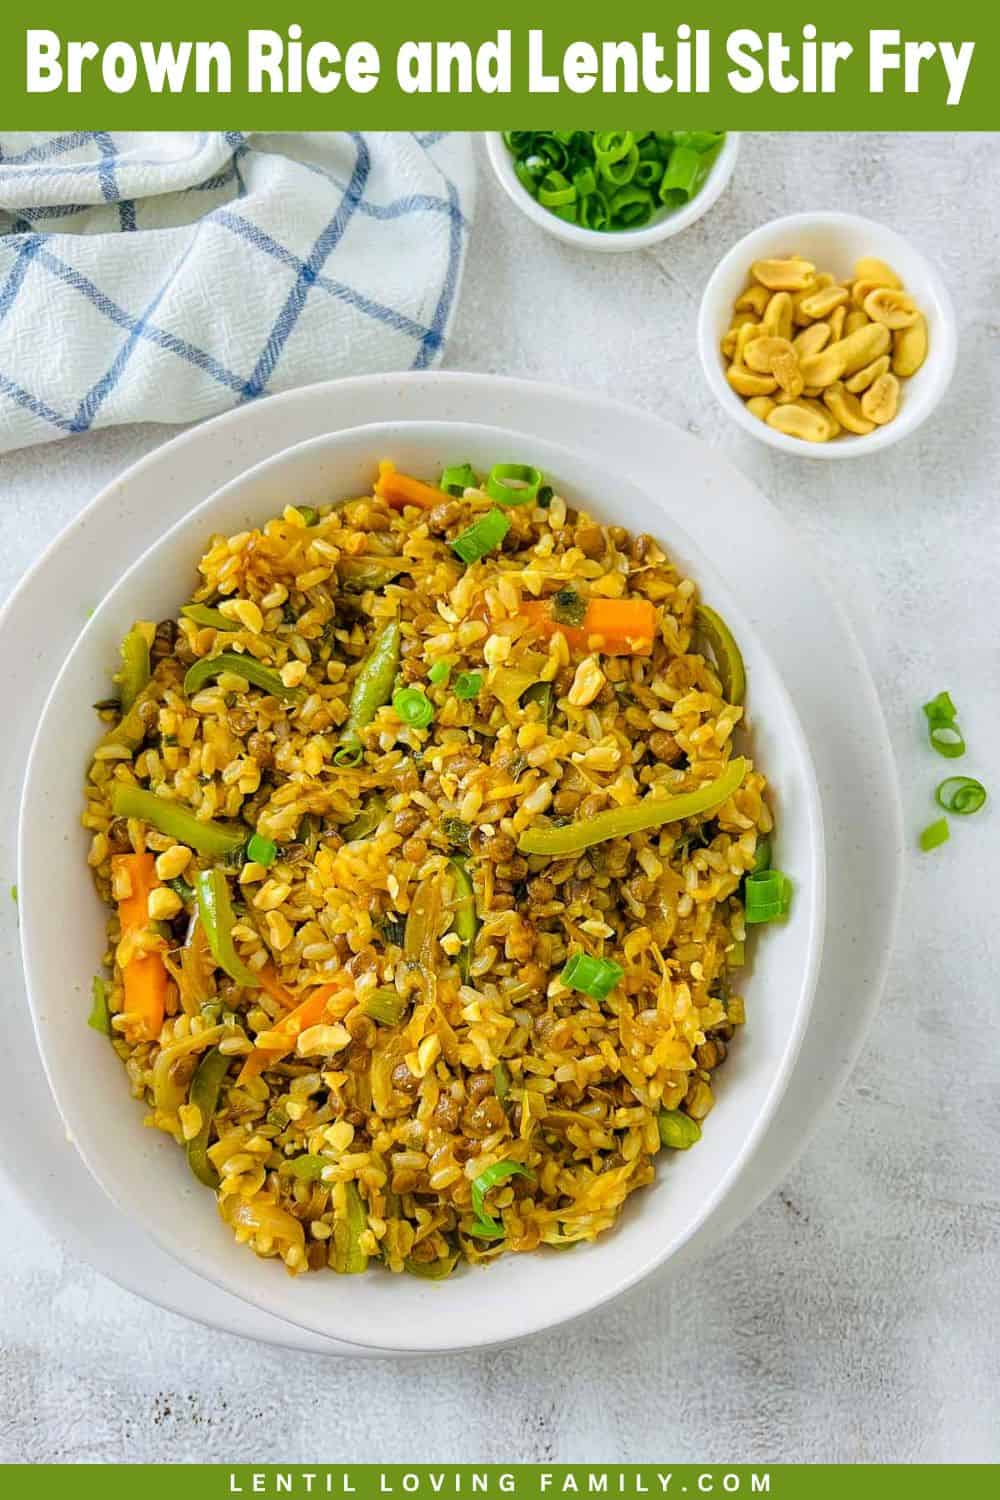 Brown rice and lentil stir fry Pinterest Image.